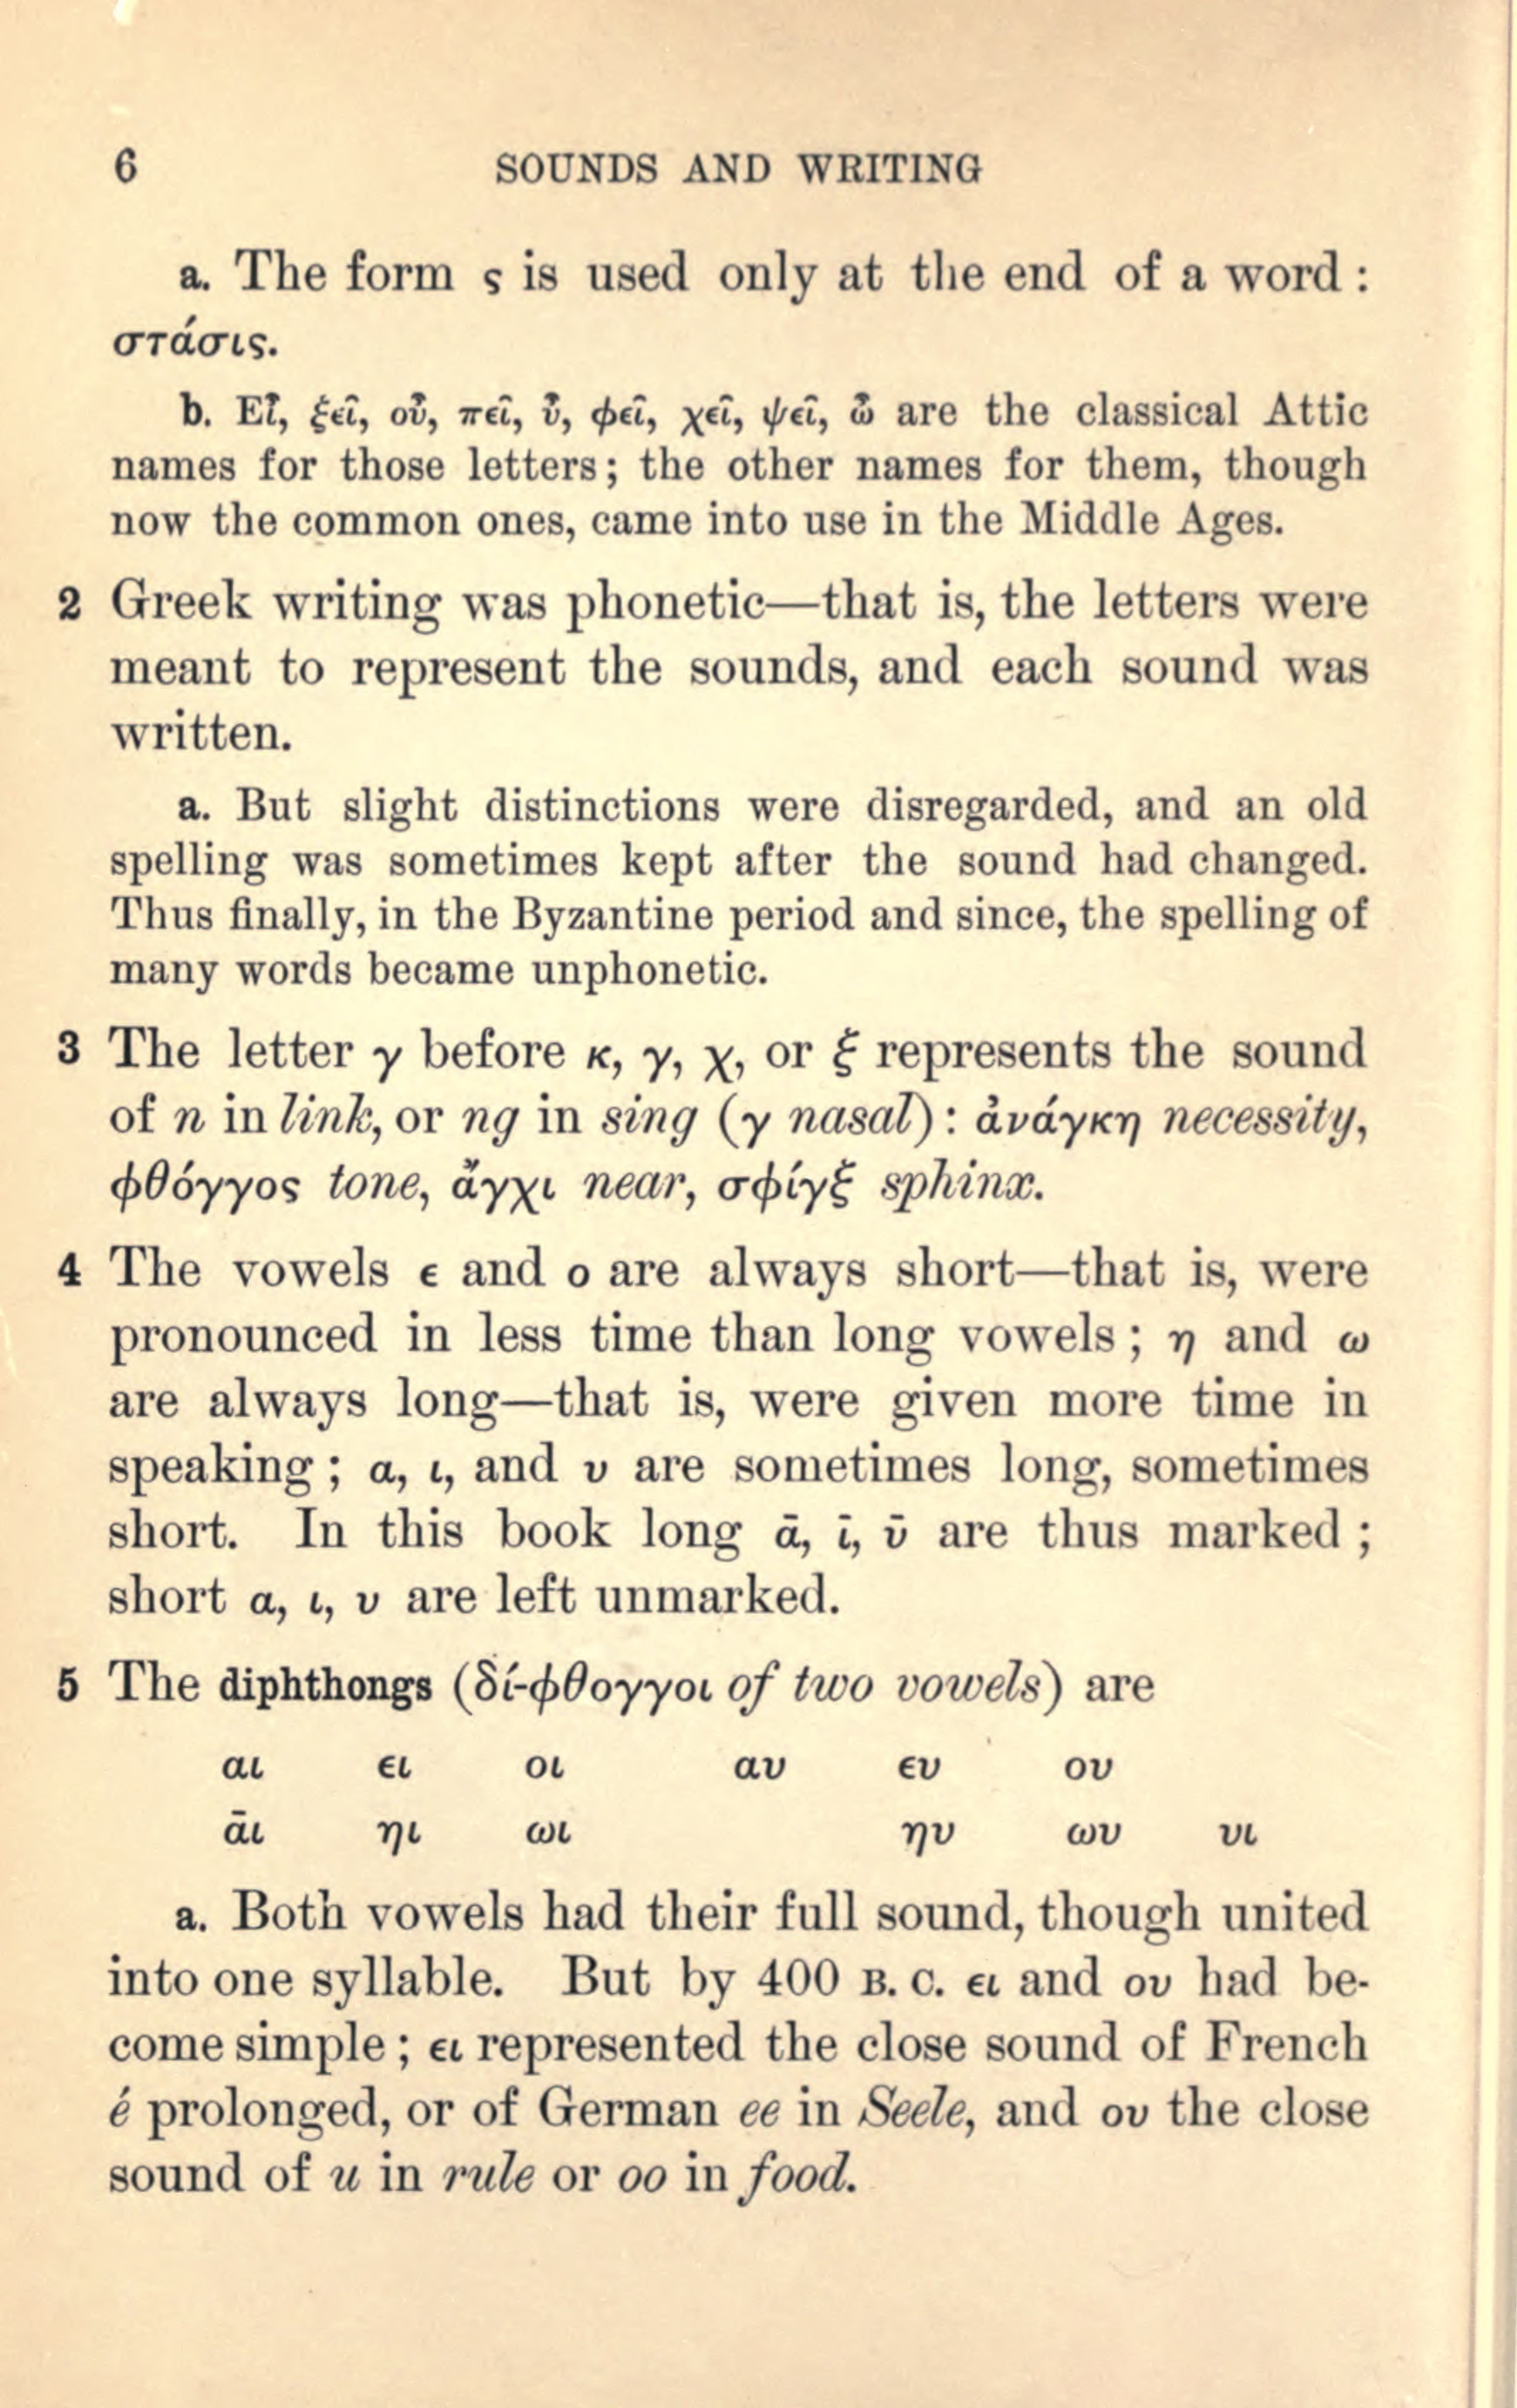 Punctuation | Dickinson College Commentaries